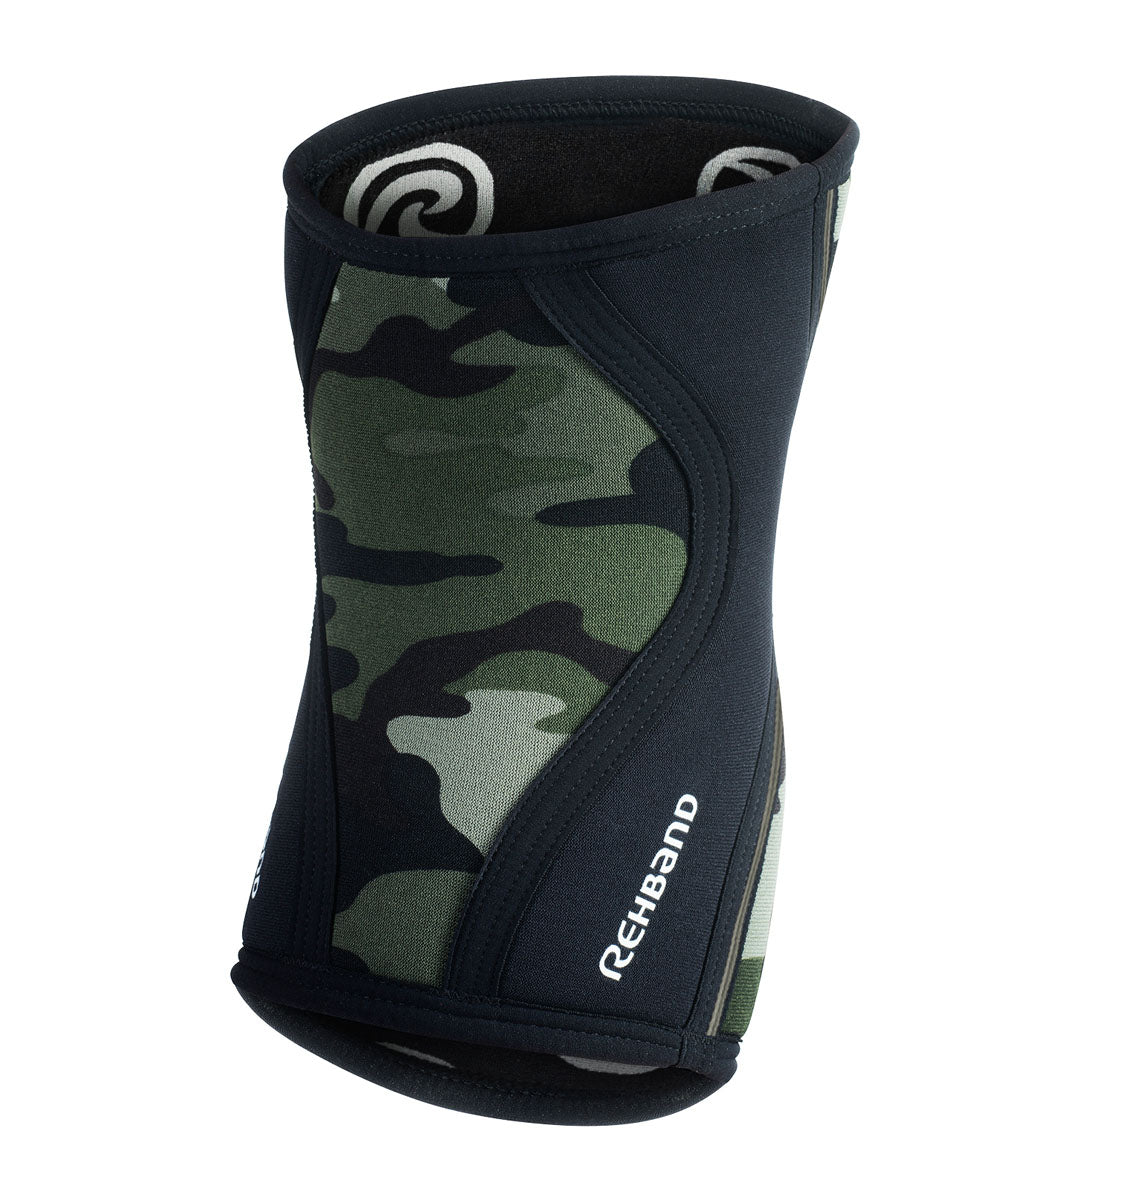 105417 - Rehband Rx Knee Sleeve - Camo - 7mm - Back